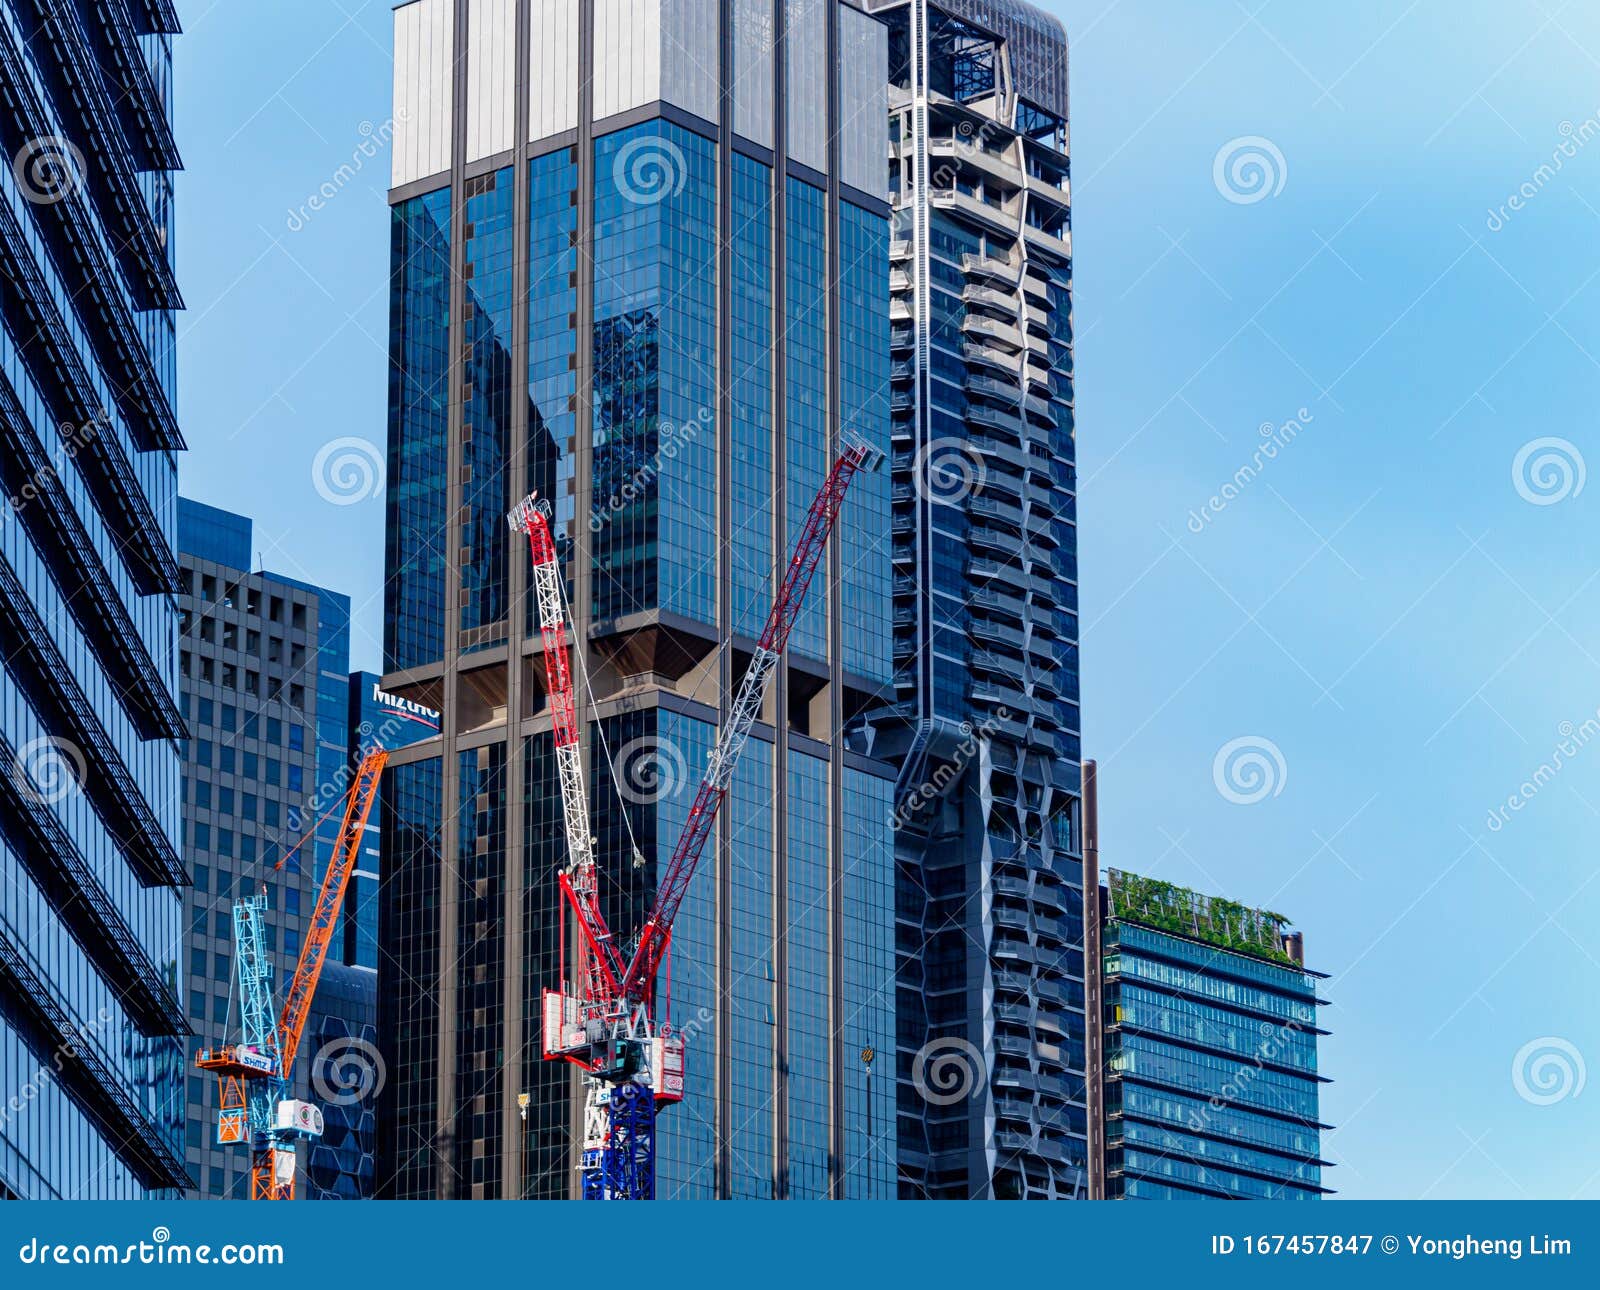 singapore Ã¢â¬â 13 apr 2019 Ã¢â¬â high-rise building cranes in singaporeÃ¢â¬â¢s tanjong pagar central business district cbd with copy